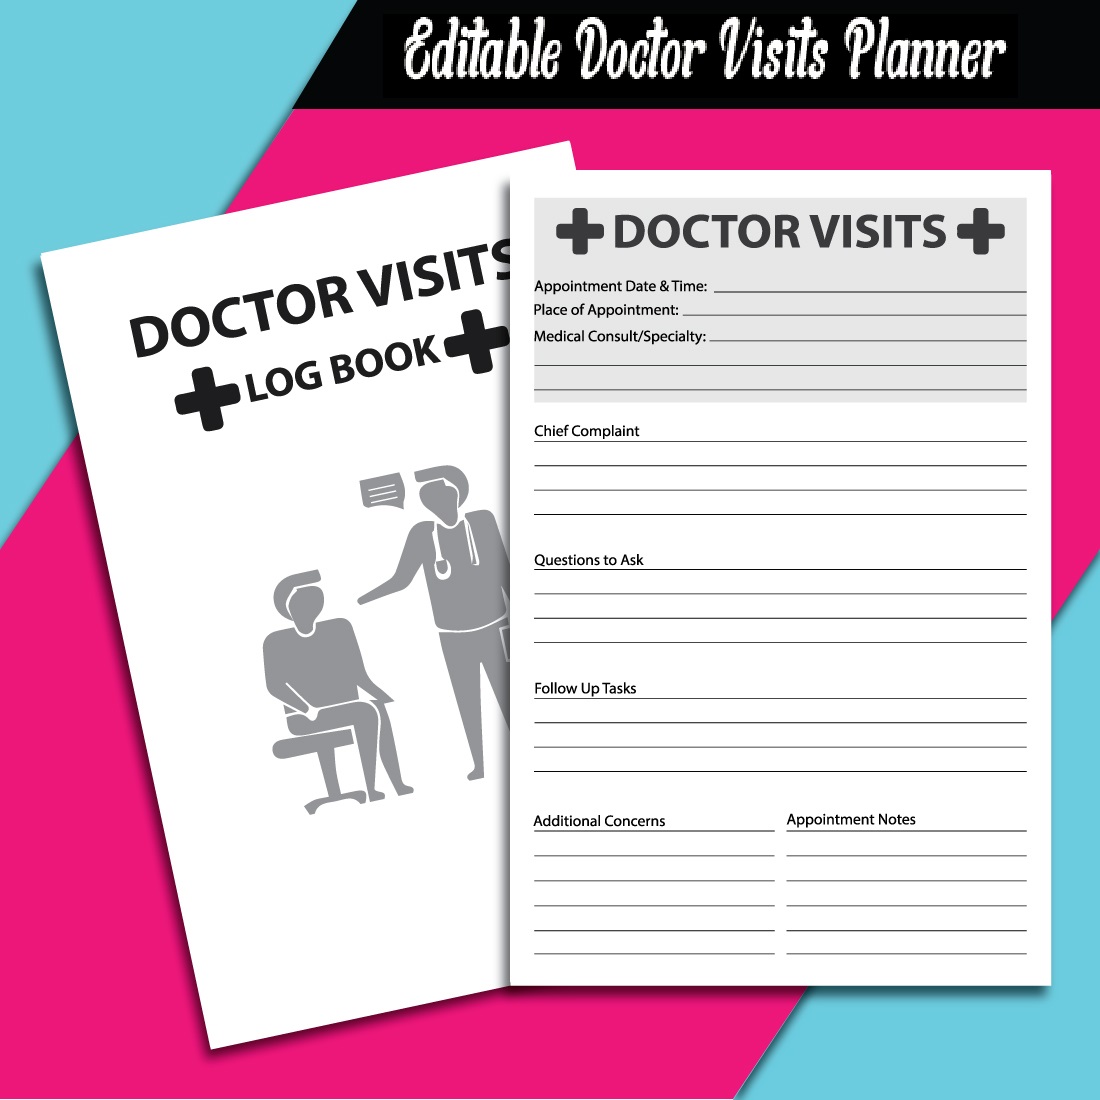 Doctor Visit Editable Log Book Planner cover image.